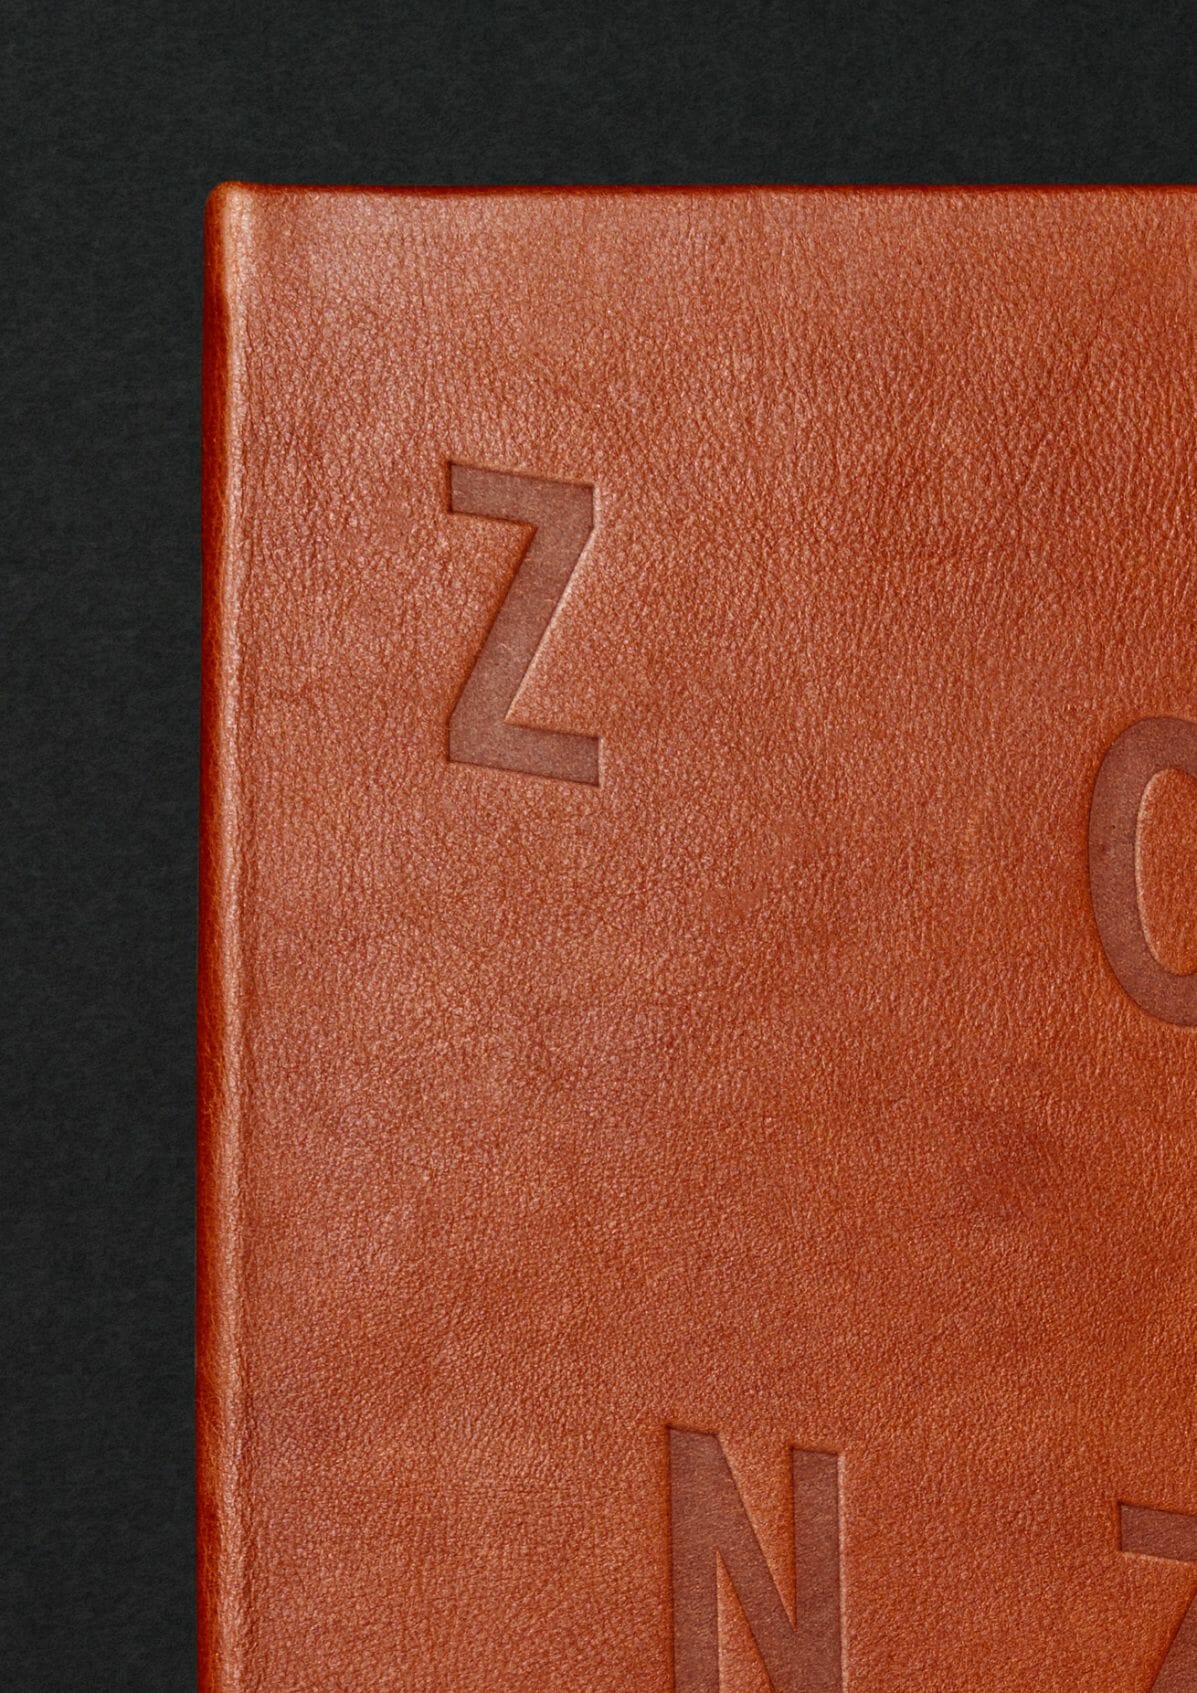 Bespoke Leather Embossed Menus for Zonzo Estate